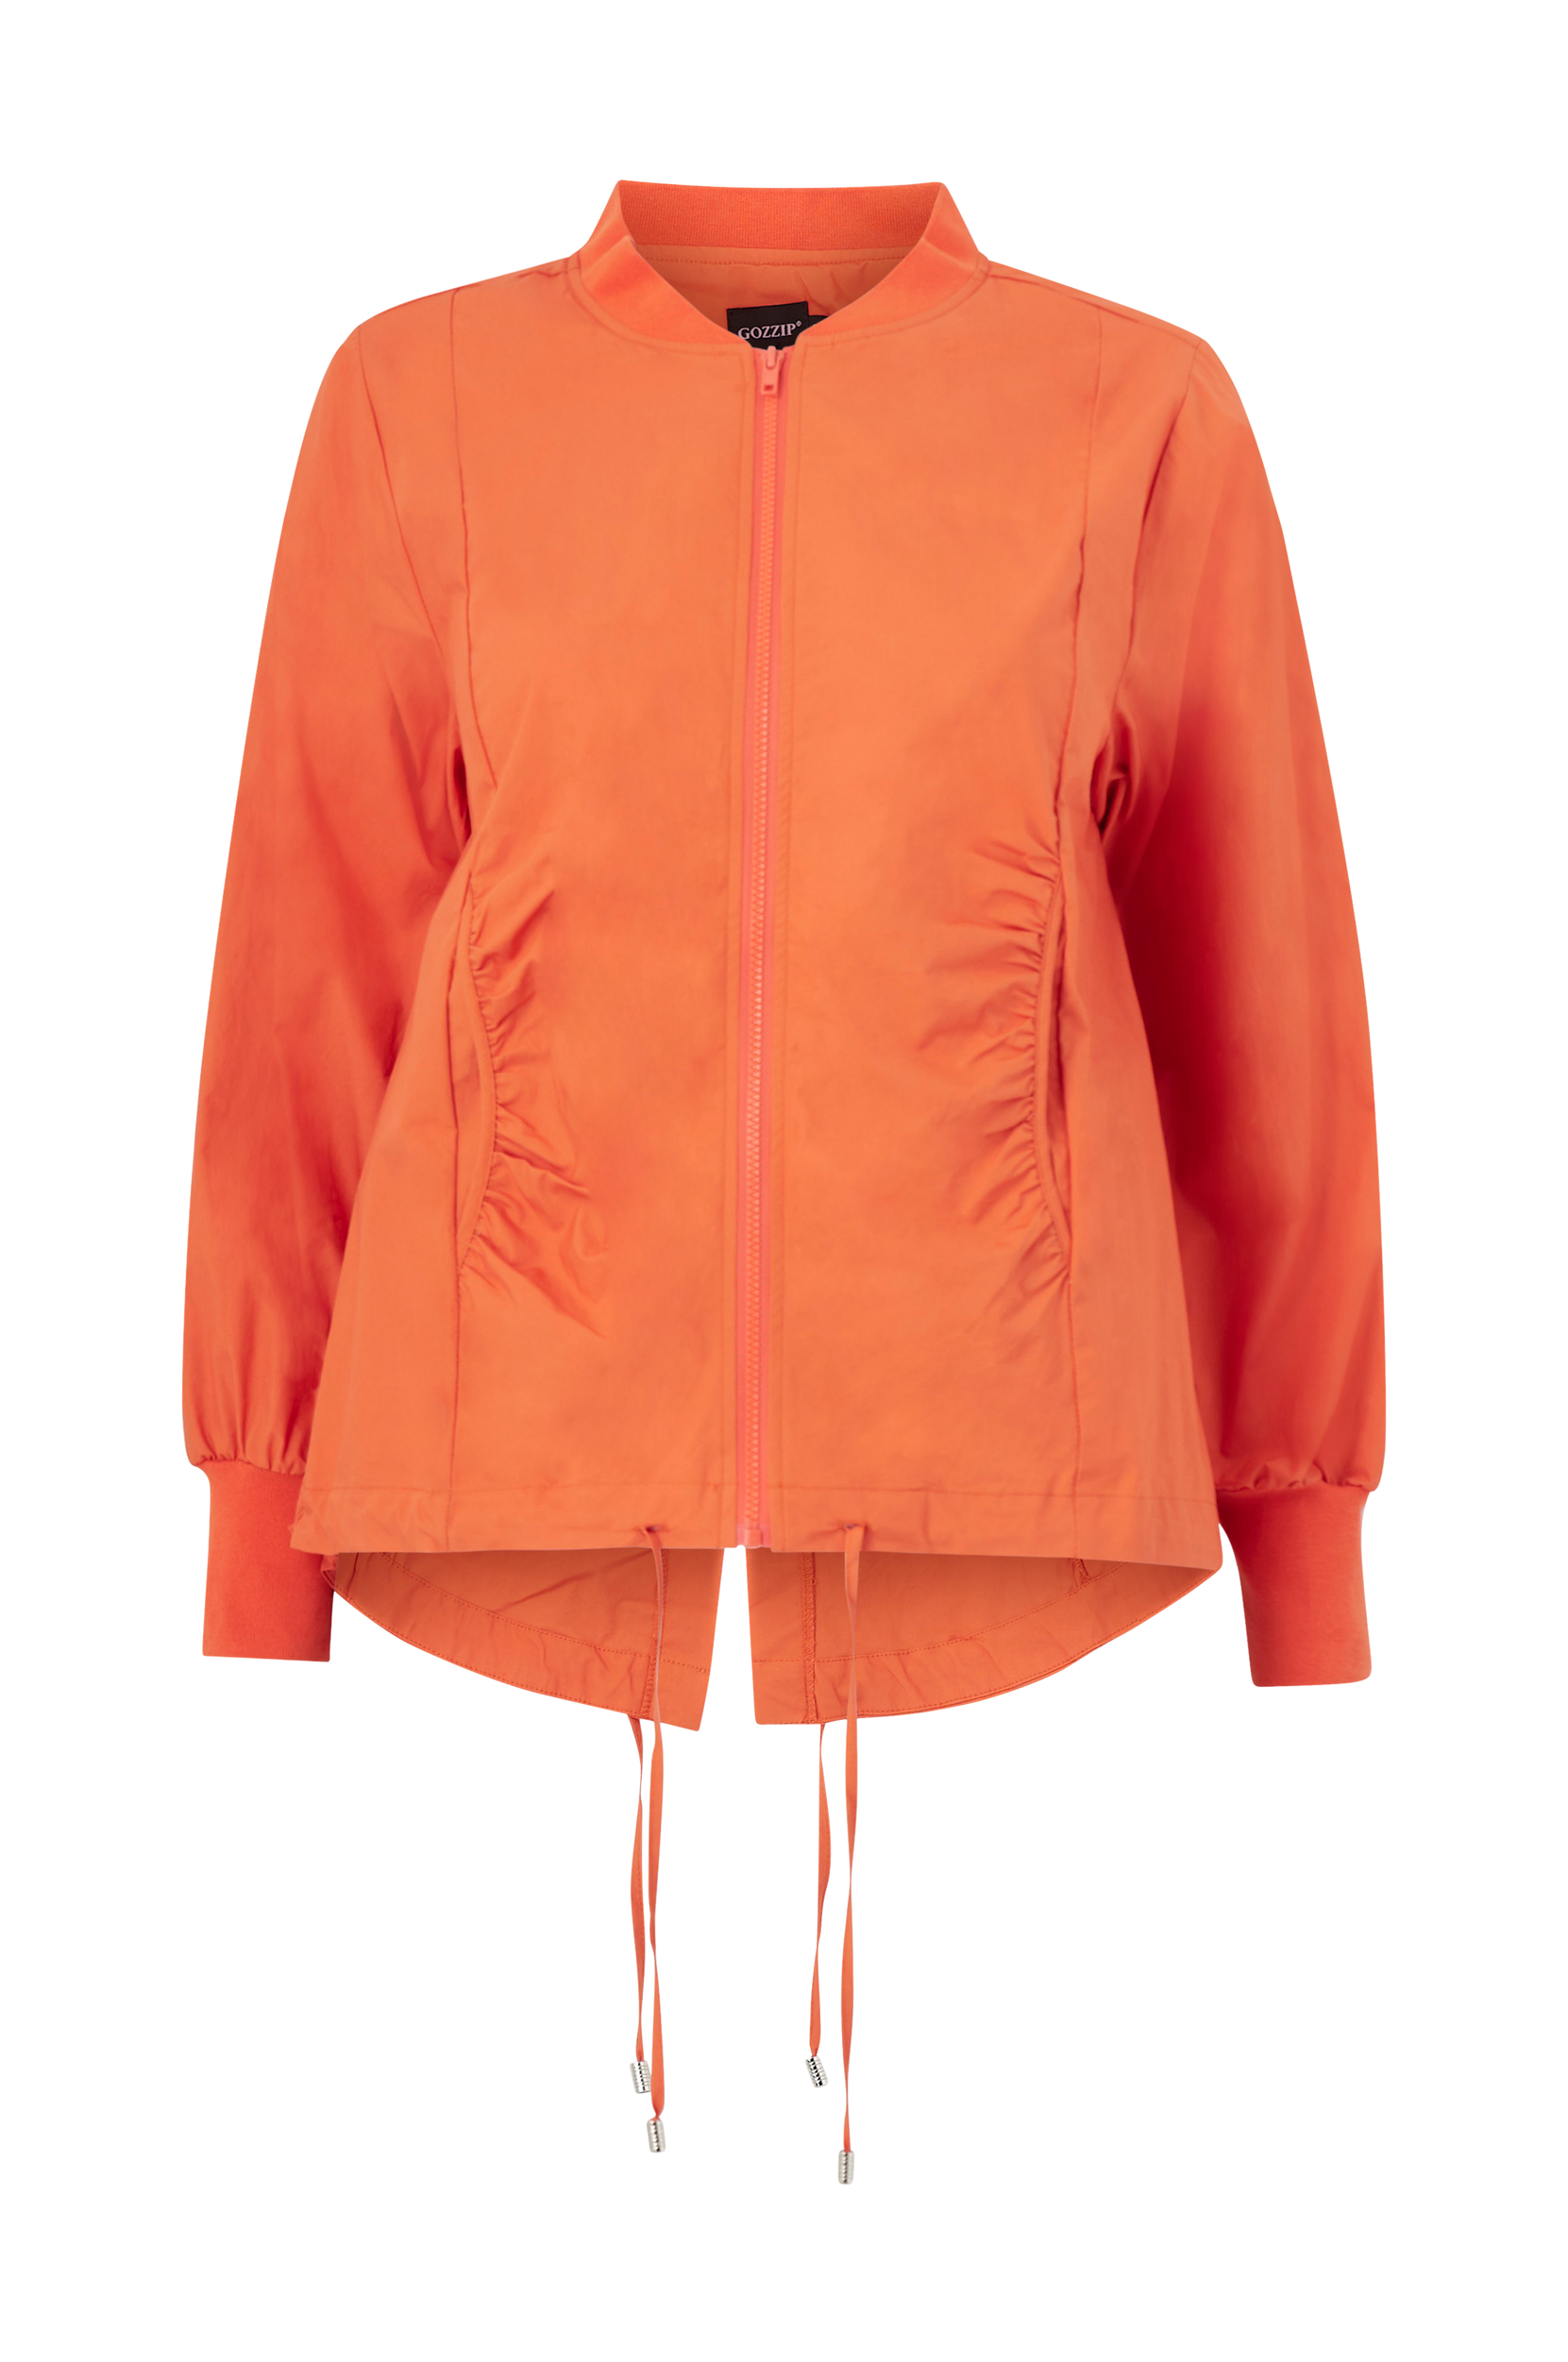 Gozzip  - Jakke Lene Short Jacket - Orange - 42/44